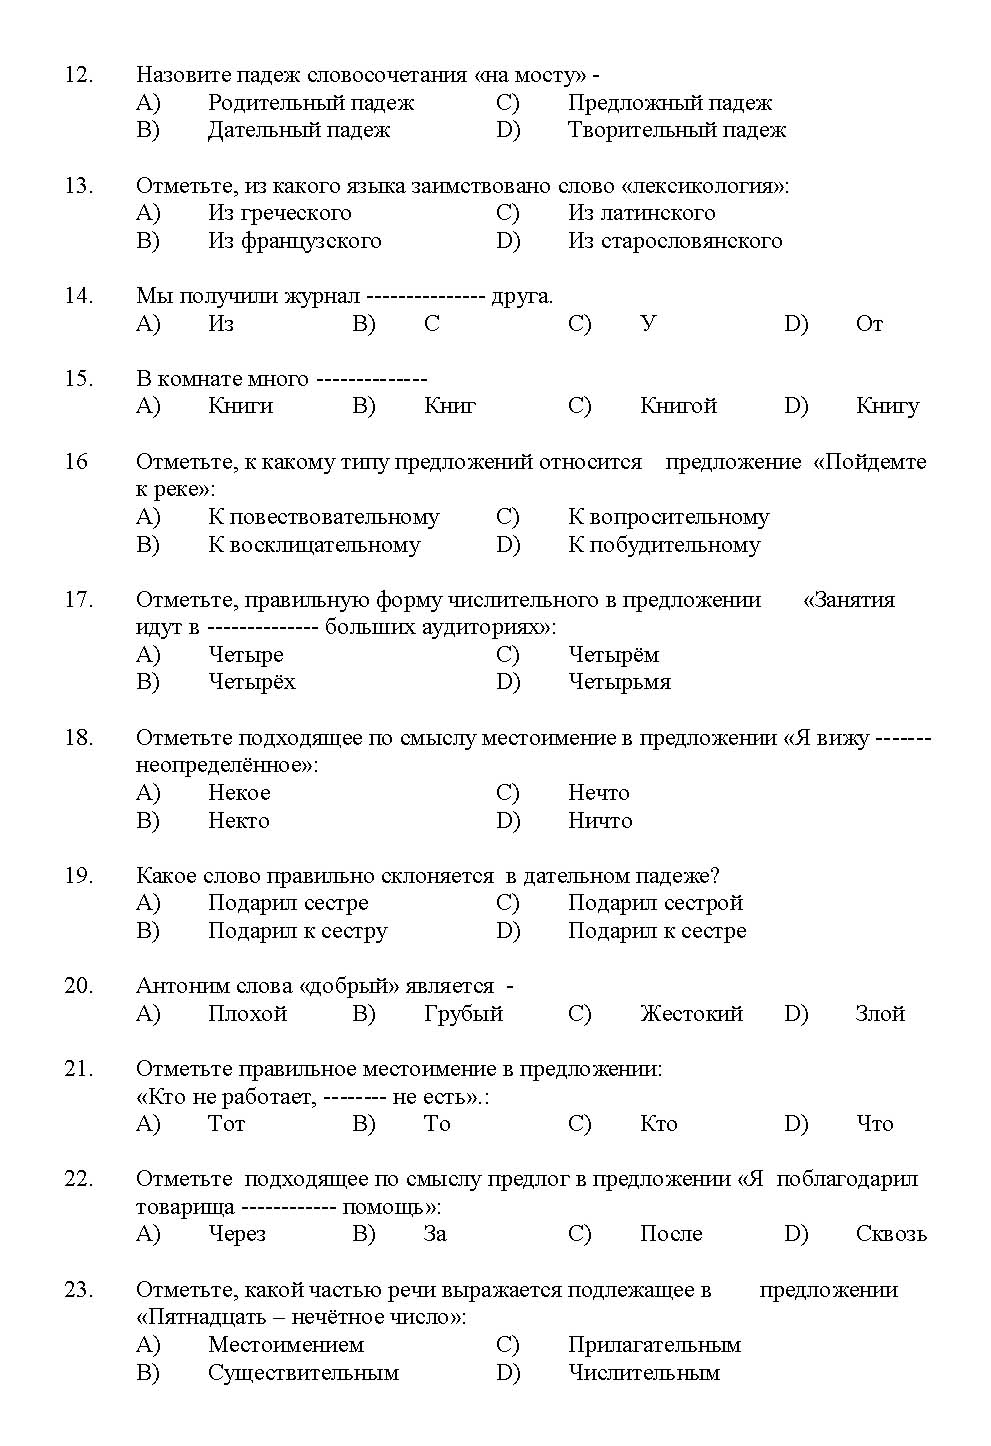 Kerala SET Russian Exam 2011 Question Code 91127 2